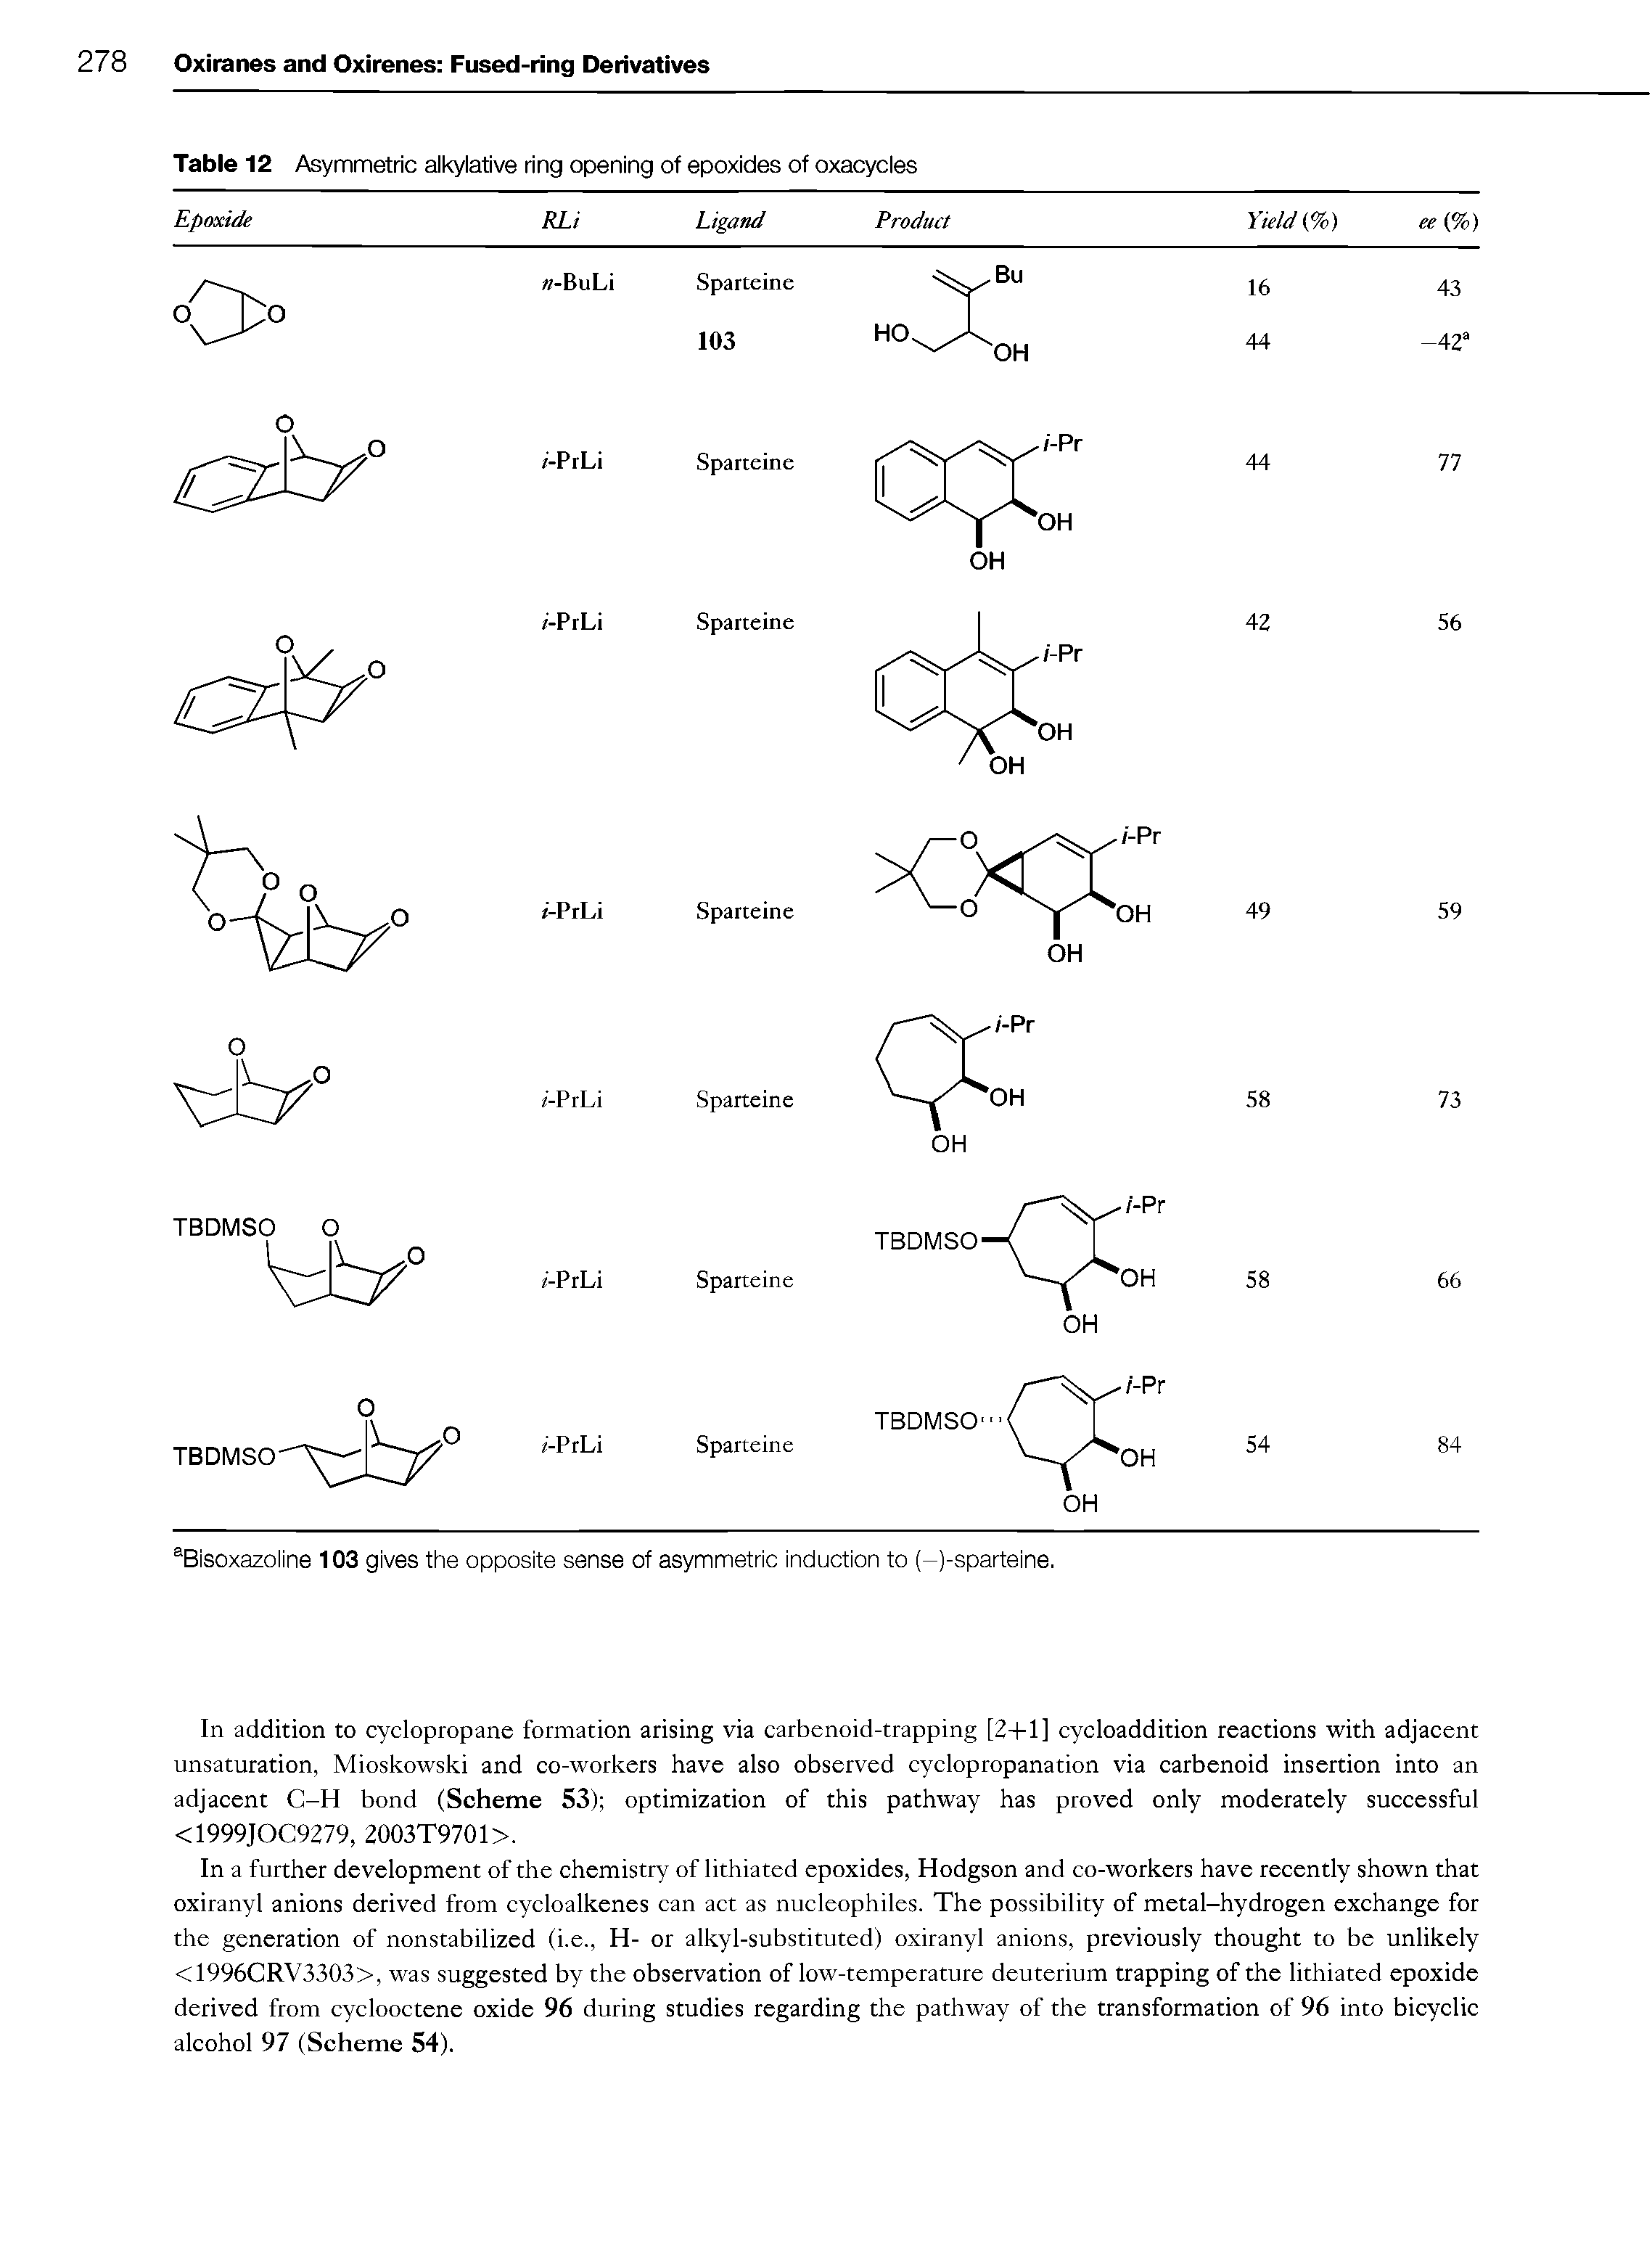 Table 12 Asymmetric alkylative ring opening of epoxides of oxacycies...